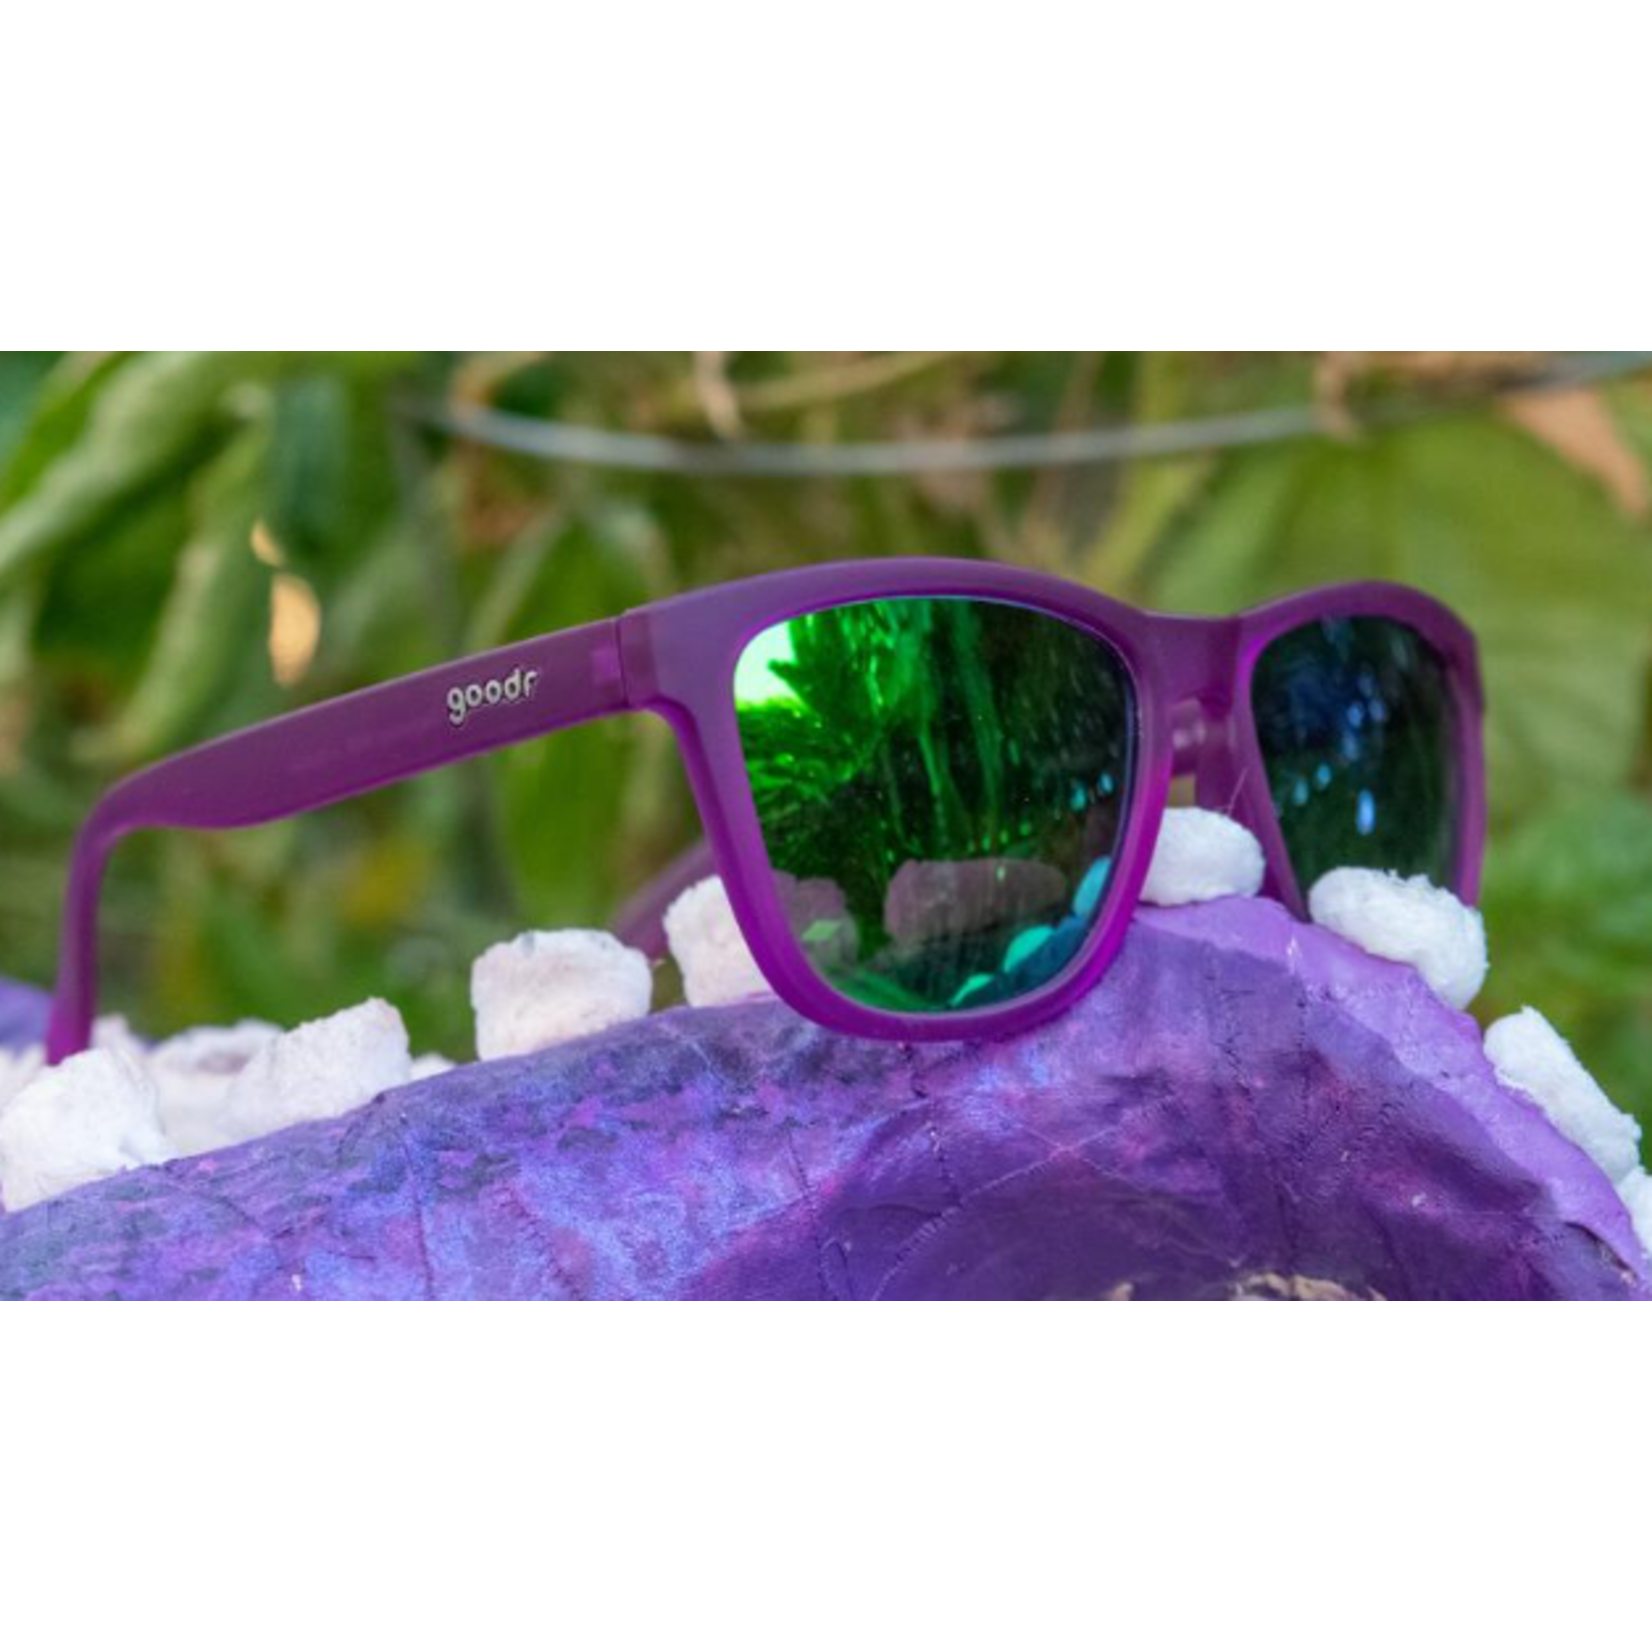 Goodr Sunglasses, Gardening with a kraken